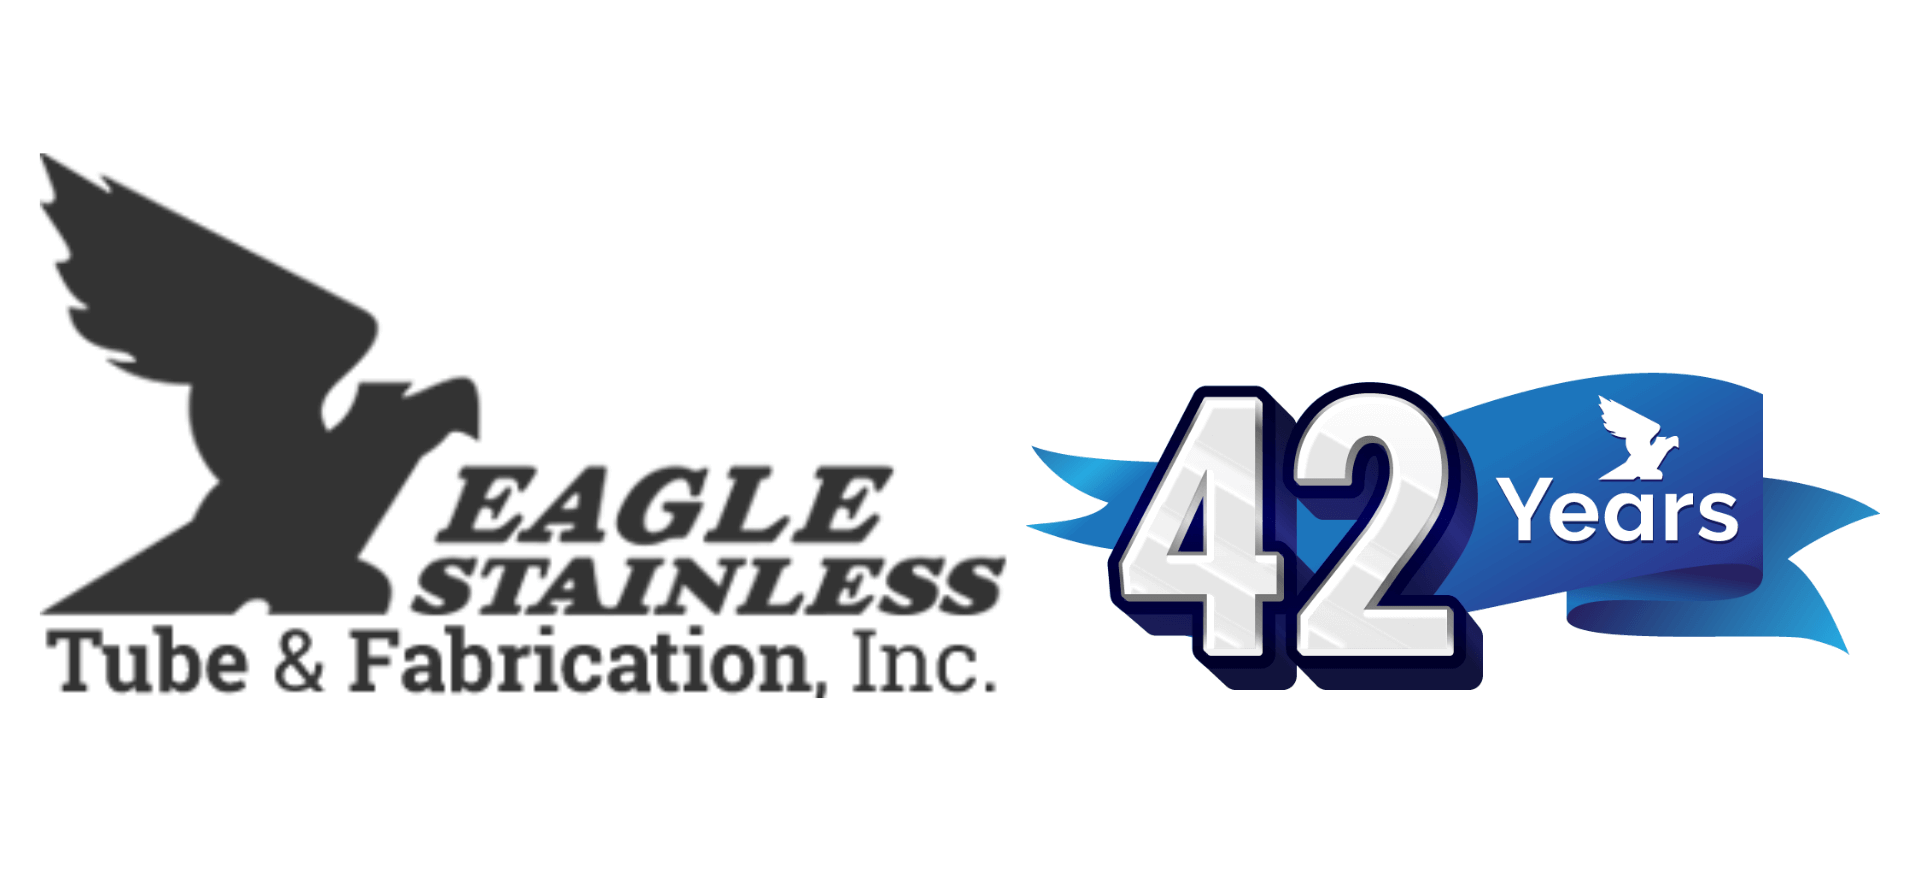 Eagle Stainless Logo